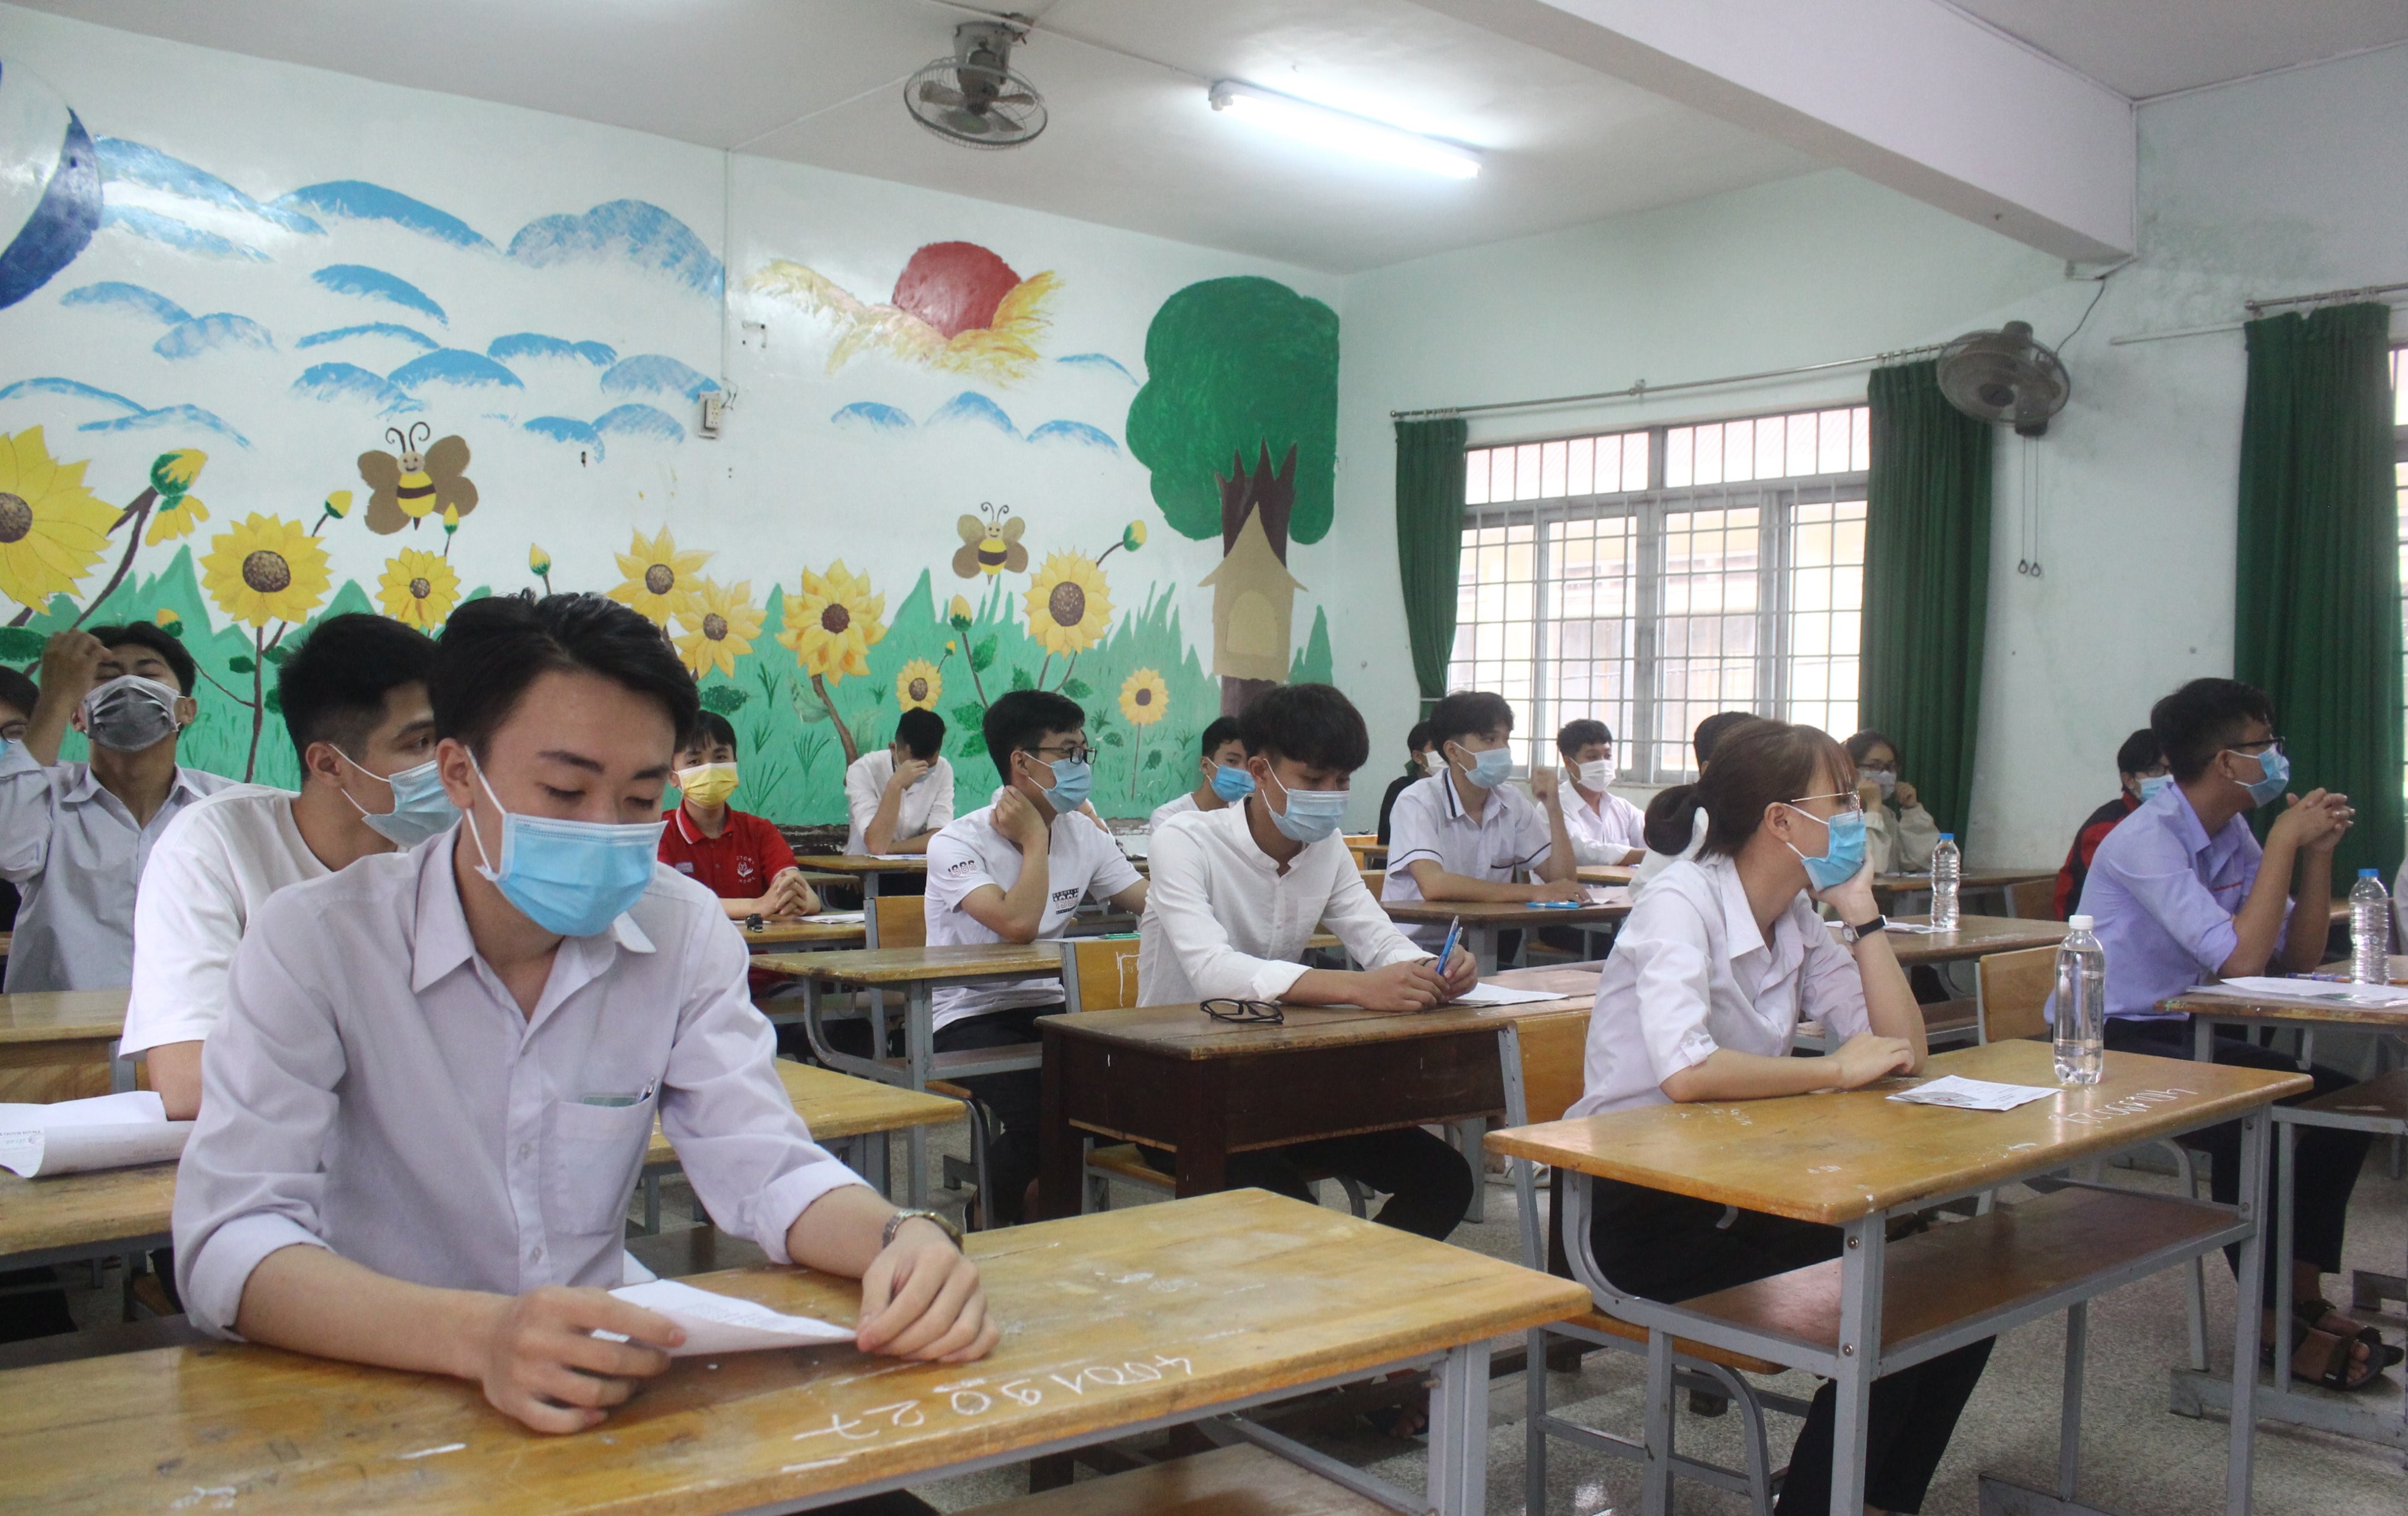 5,182 Dak Lak students sit for the Literature exam